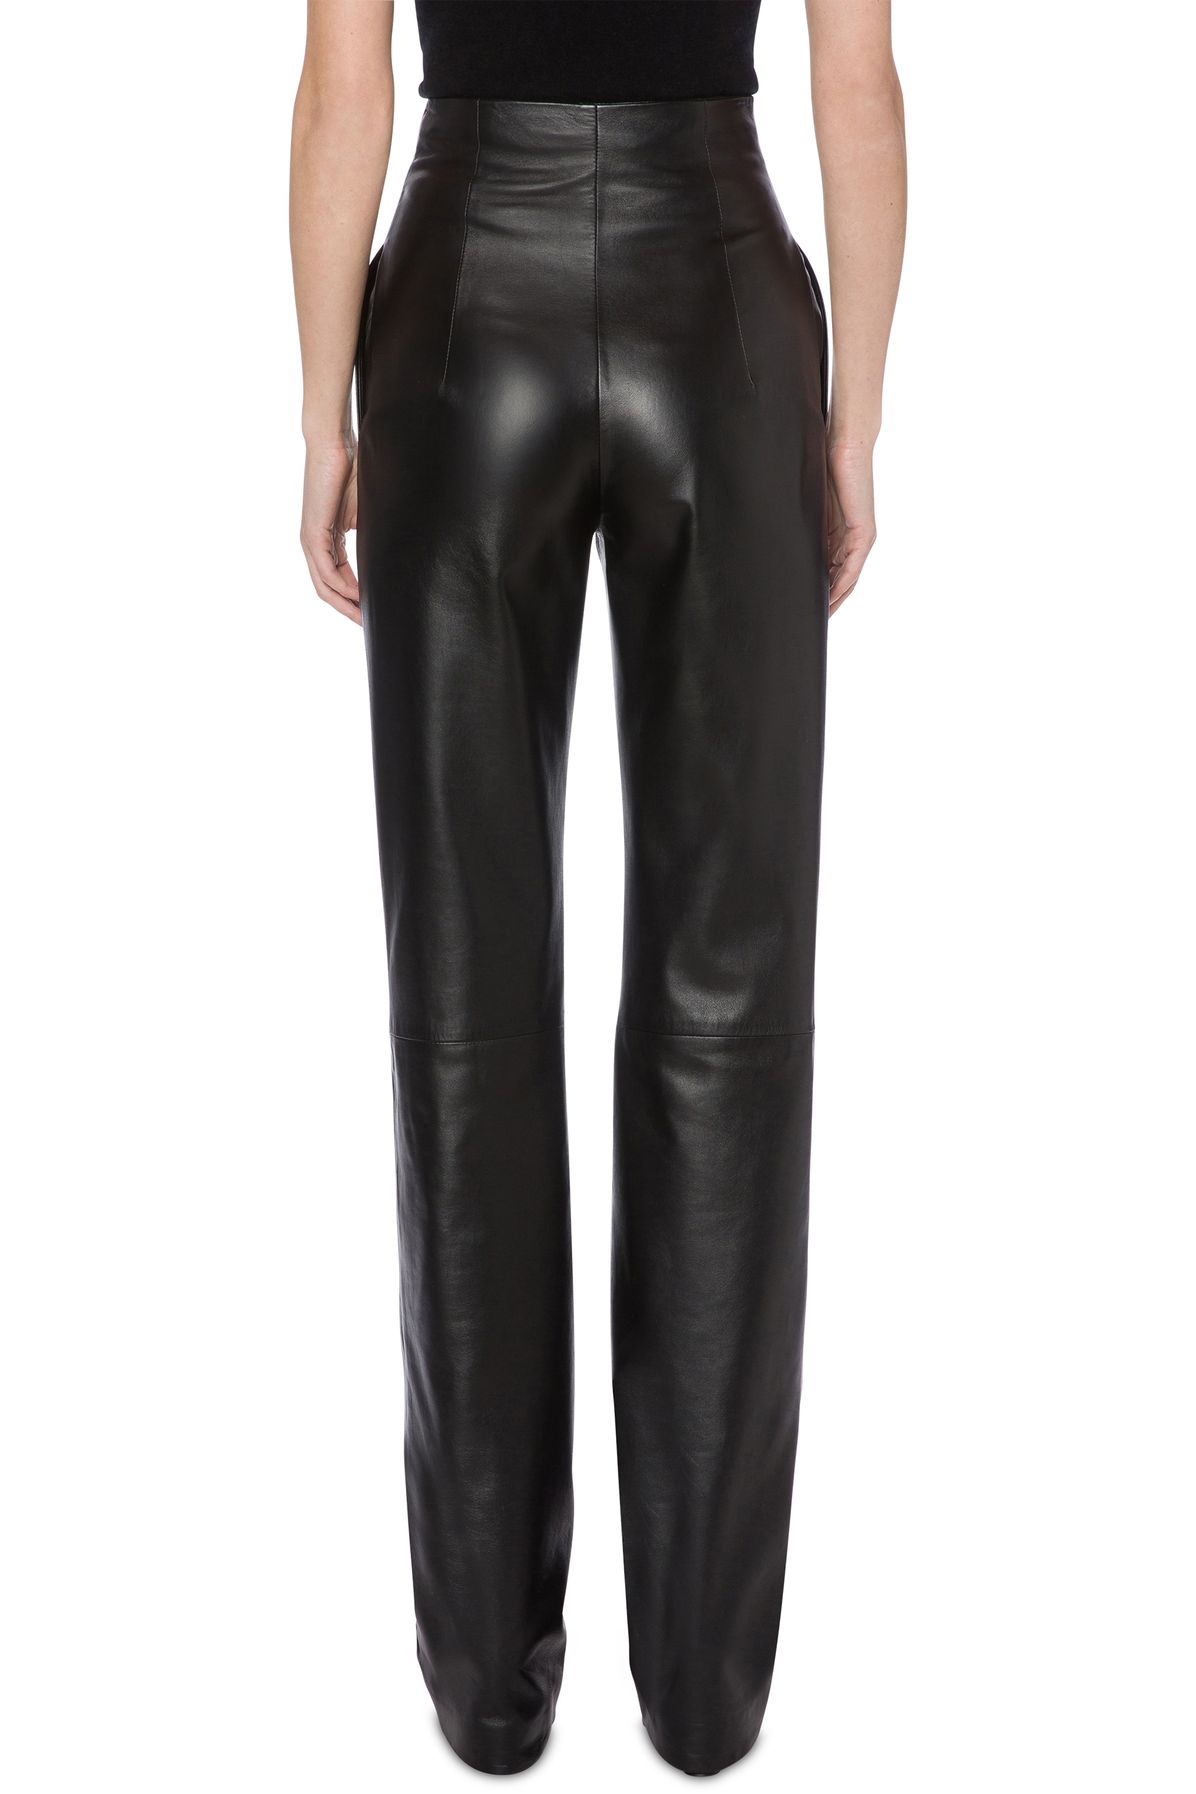 Alberta Ferretti High-waisted nappa leather trousers